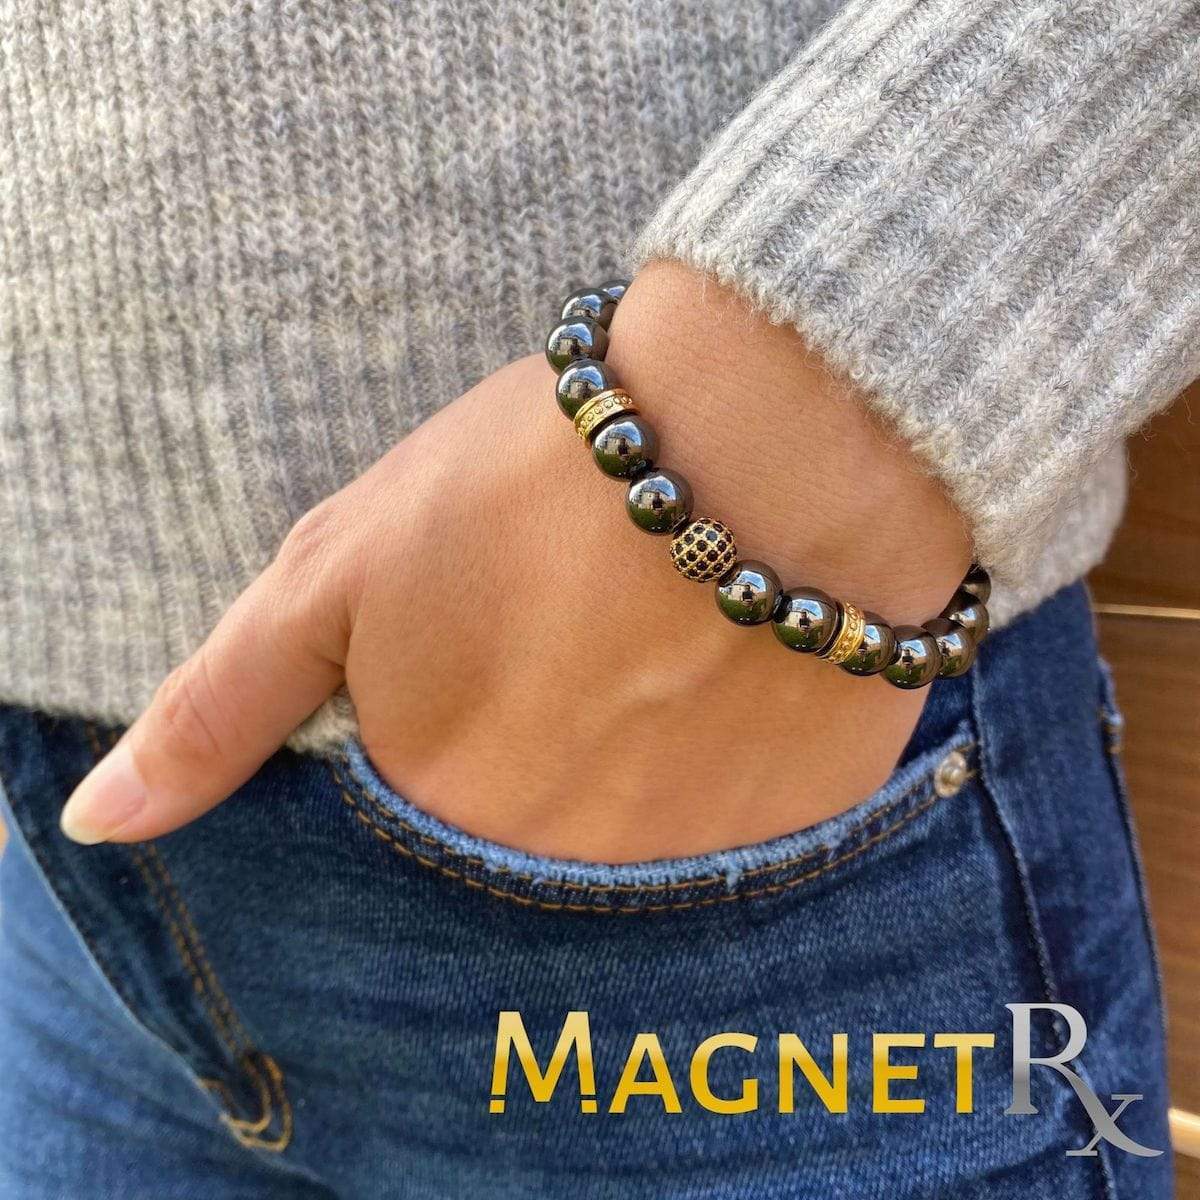 Magnetic Energy Bracelets